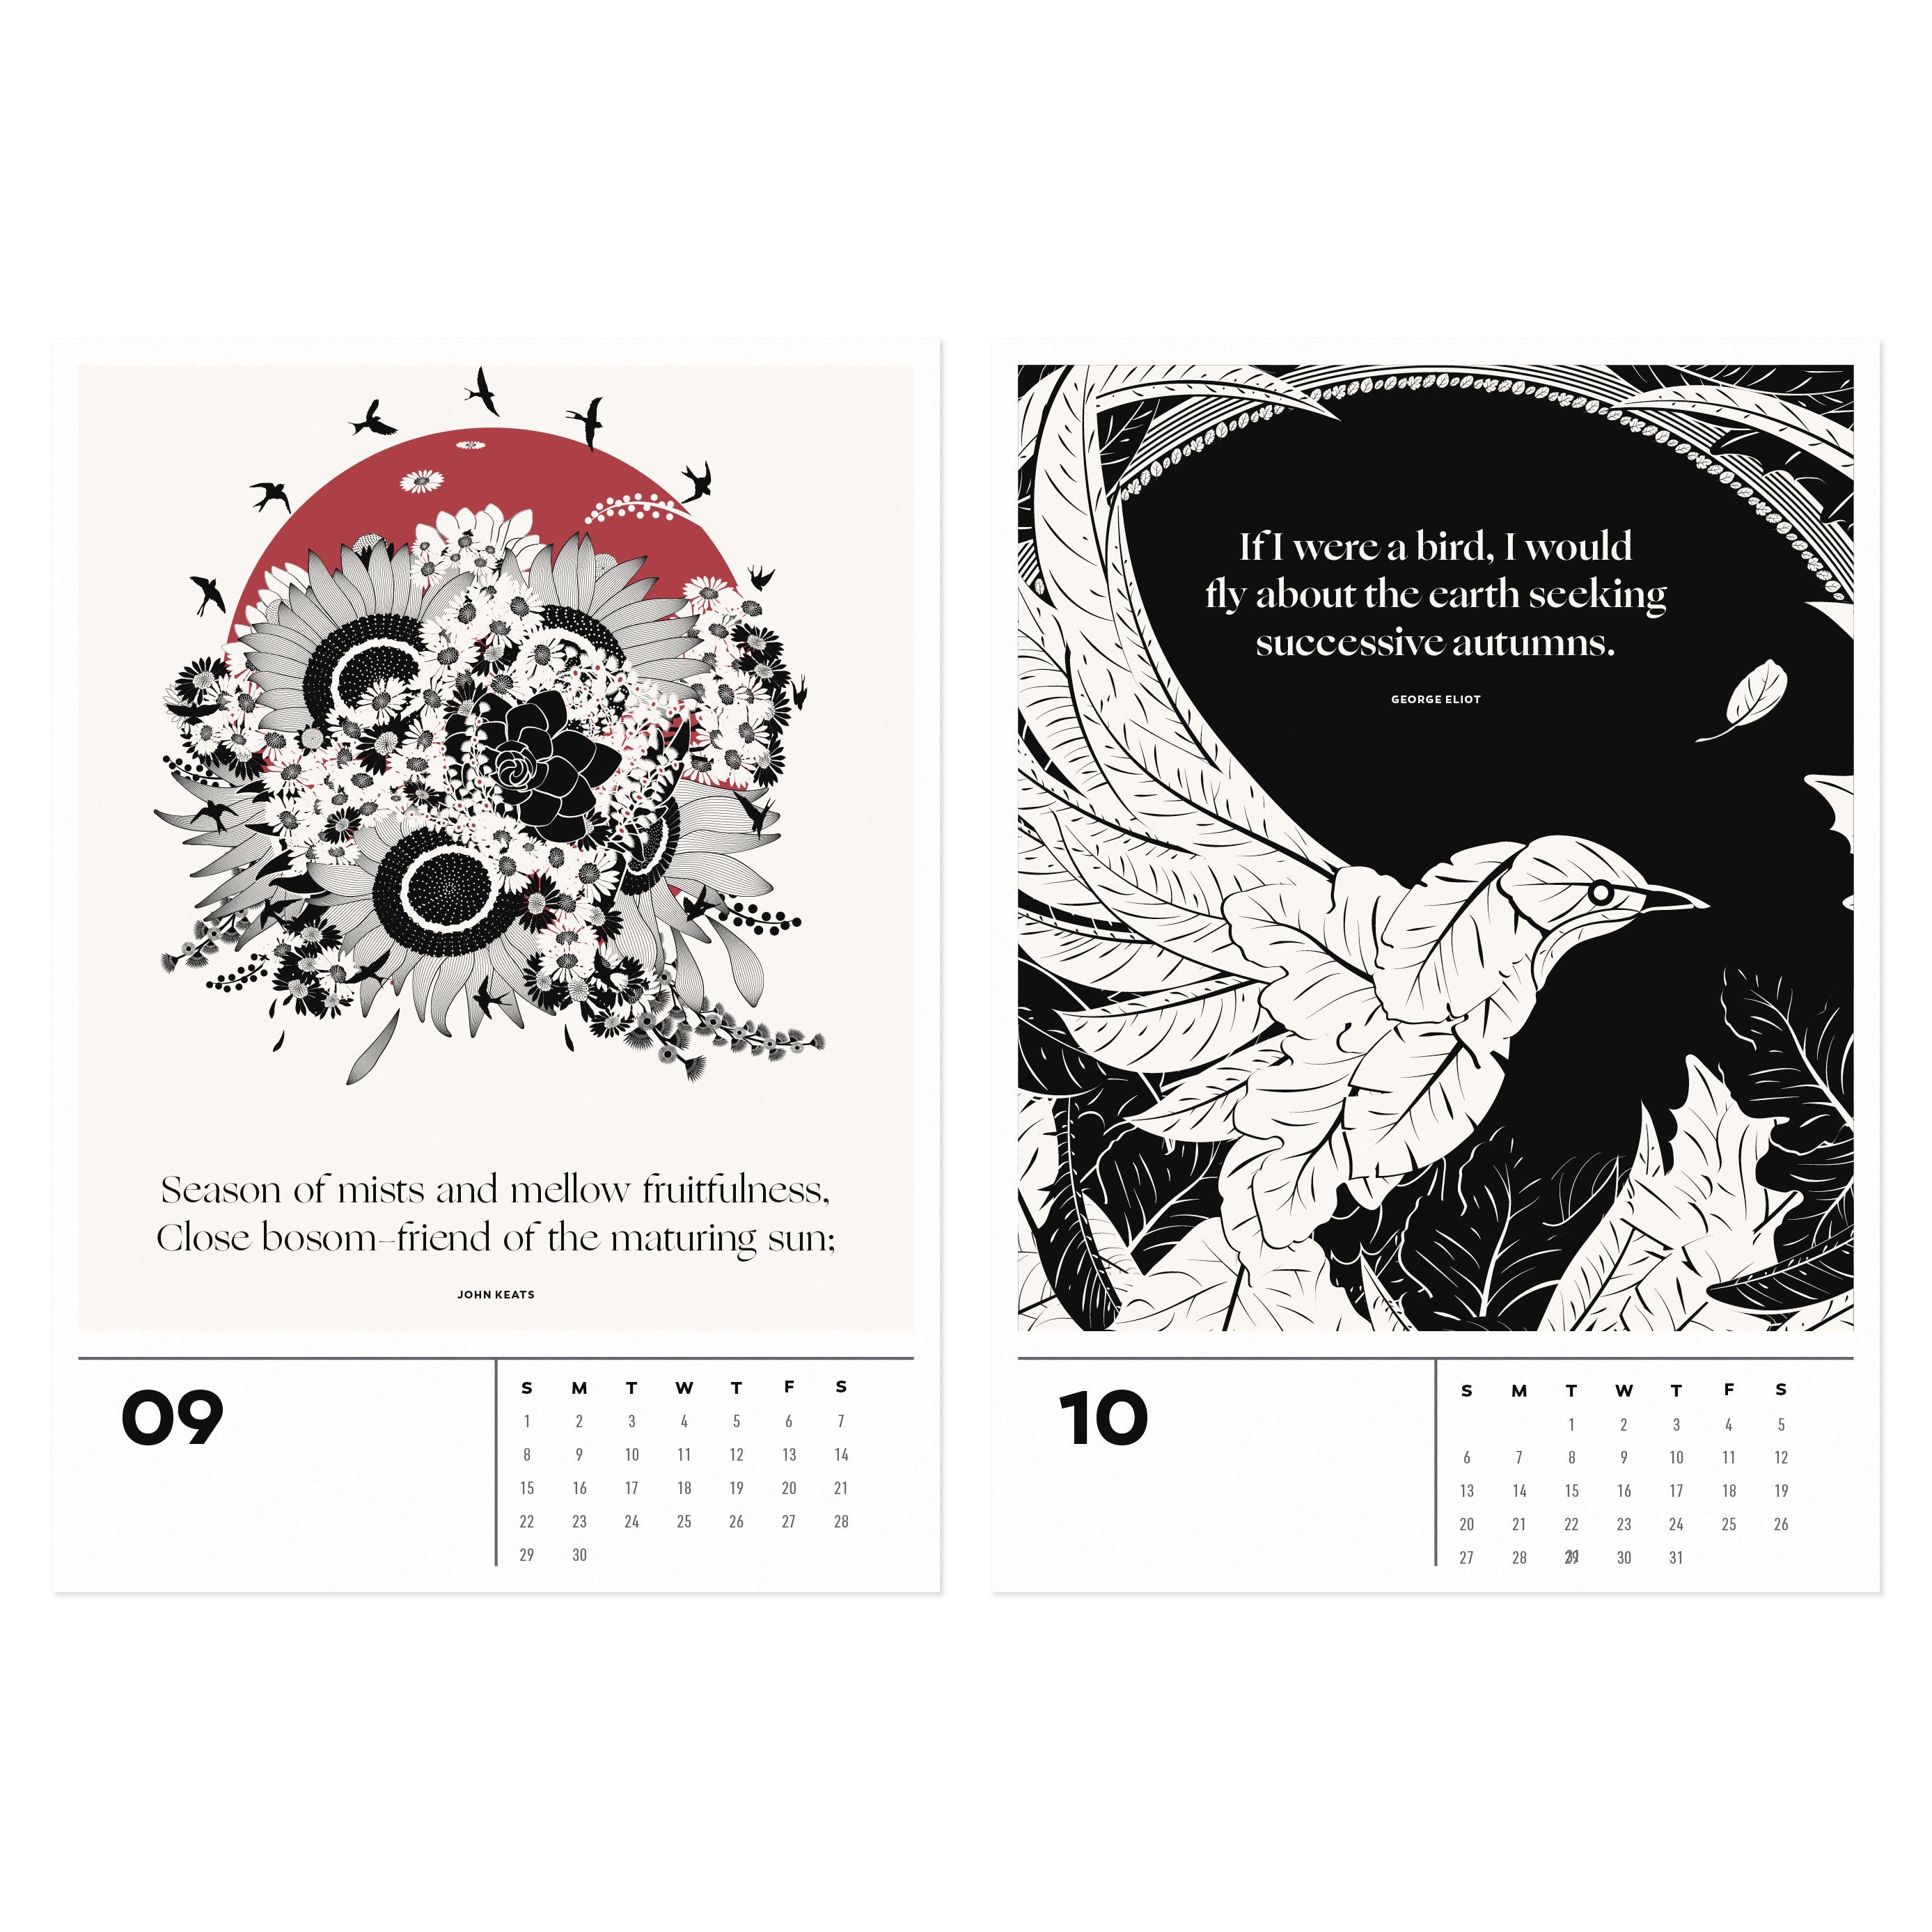 2024 Literary Calendar